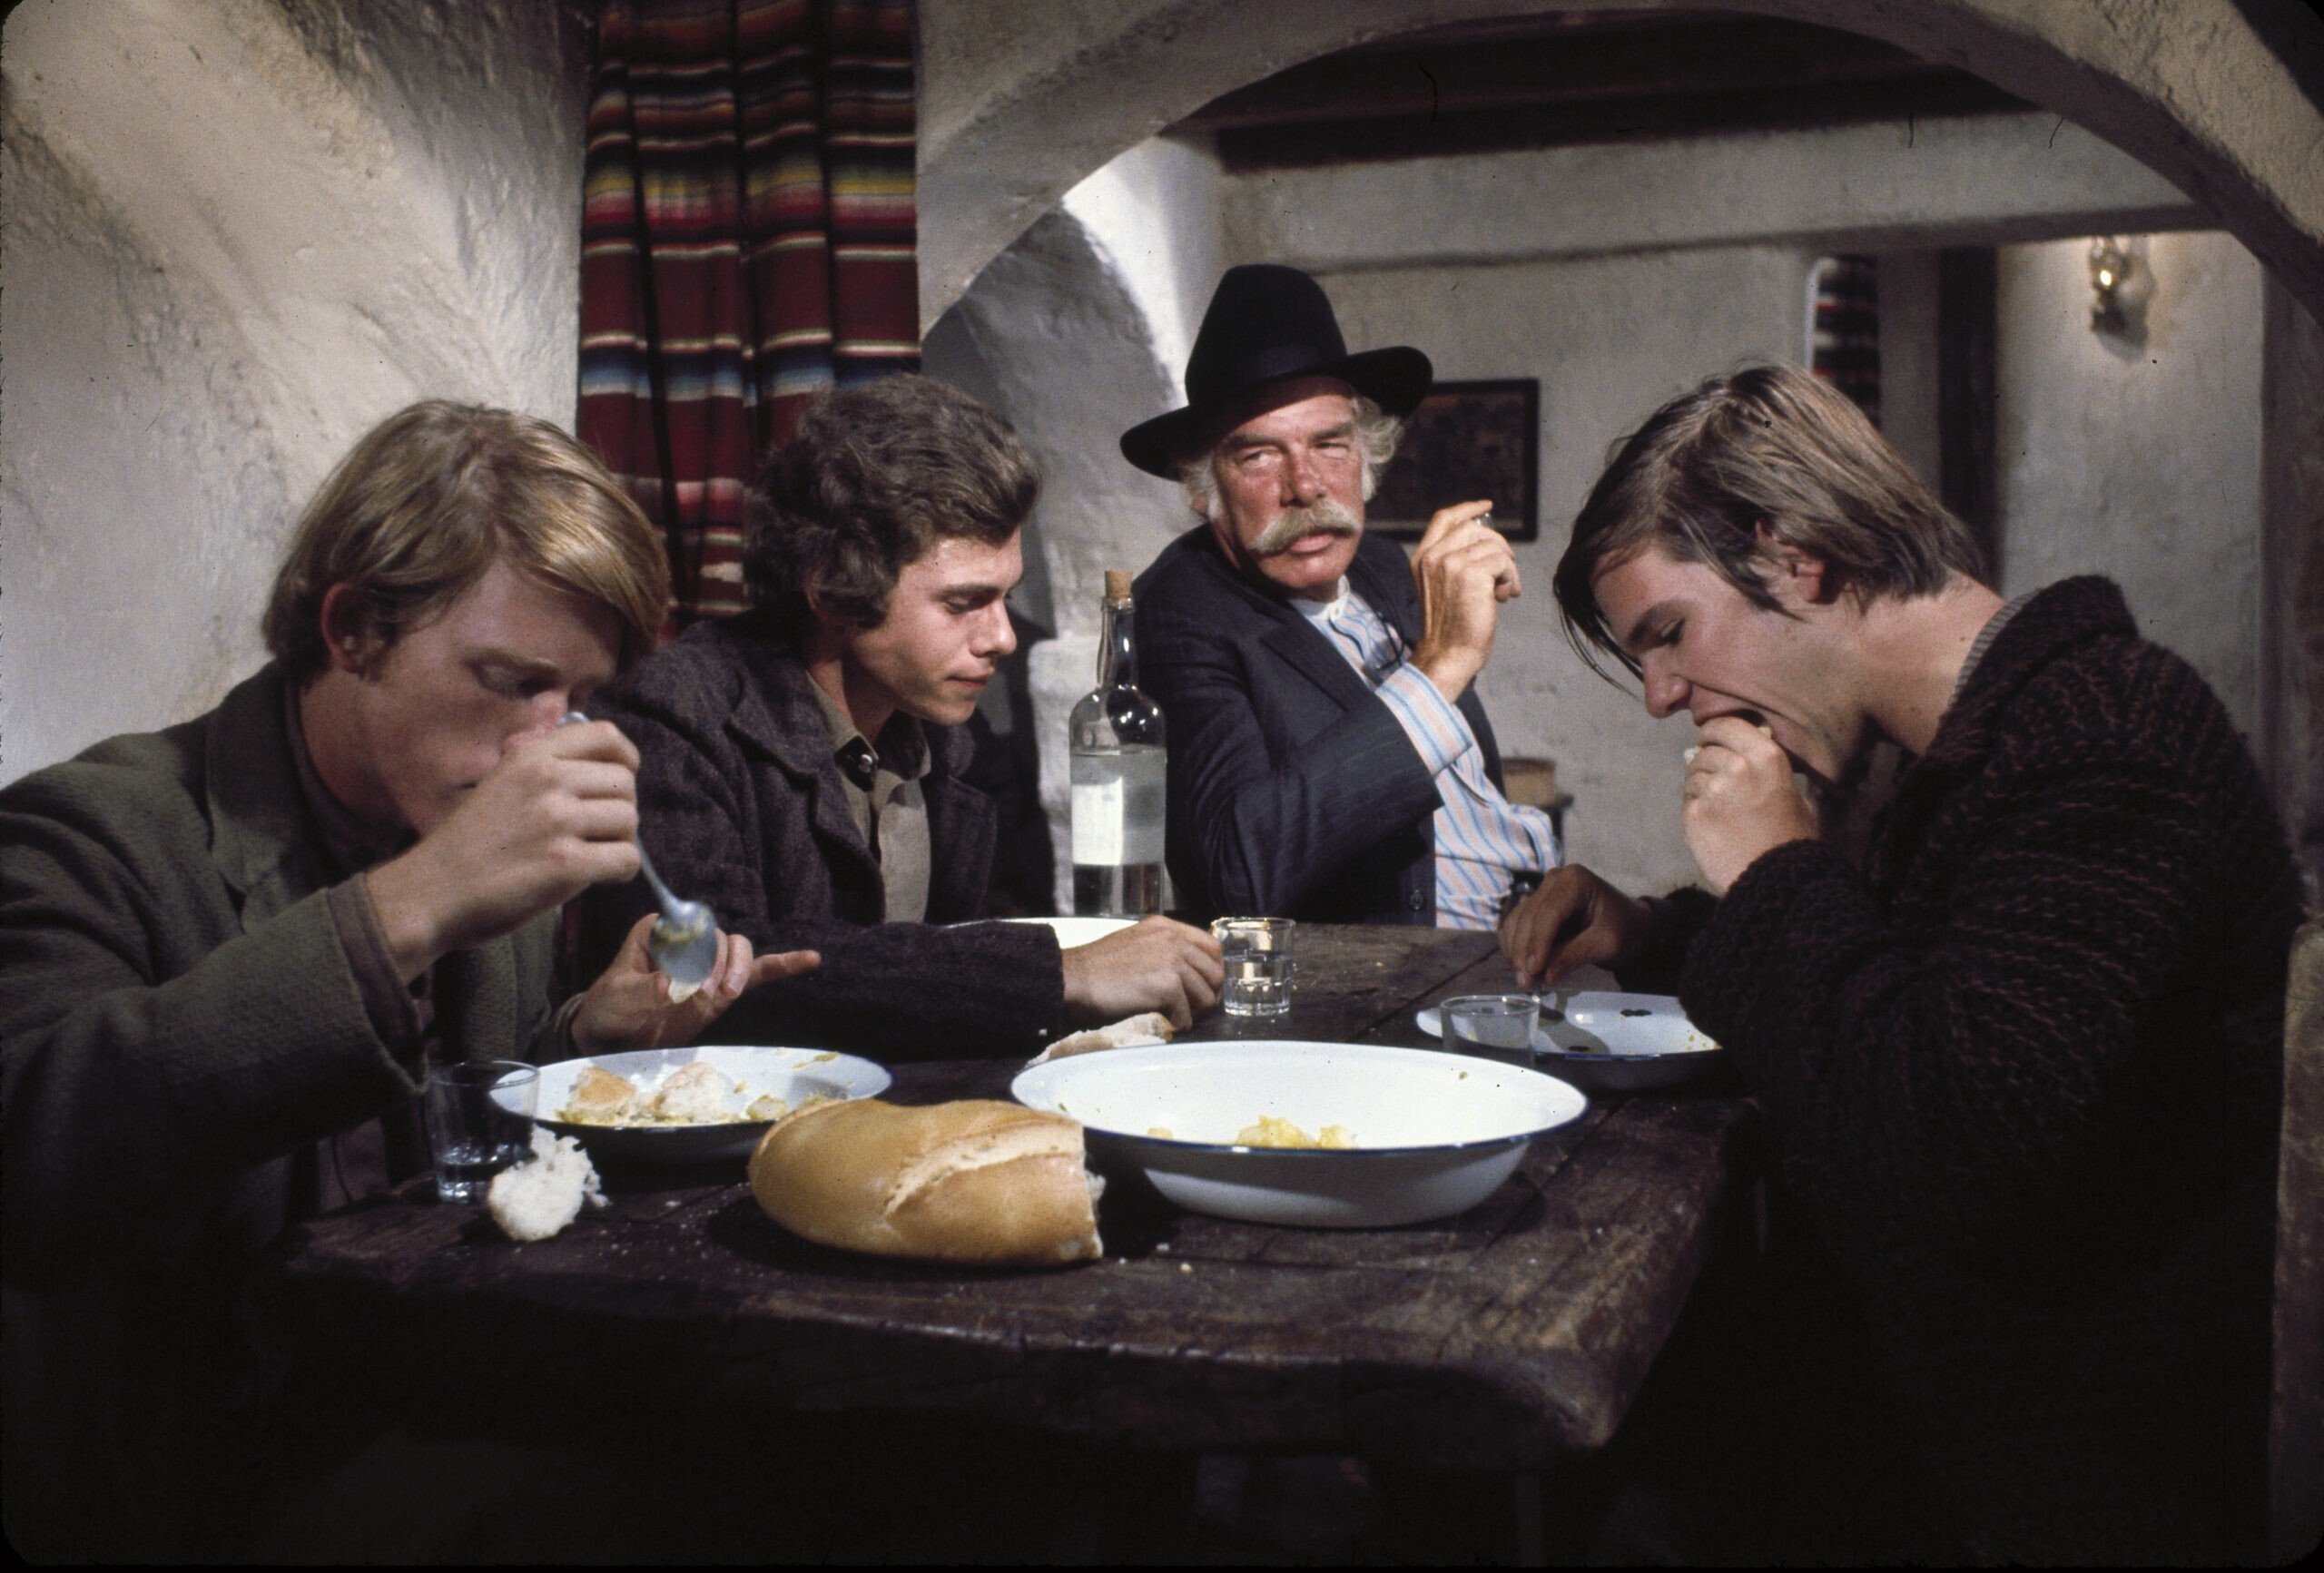 The Spikes Gang (1974) ORIGINAL TRAILER 